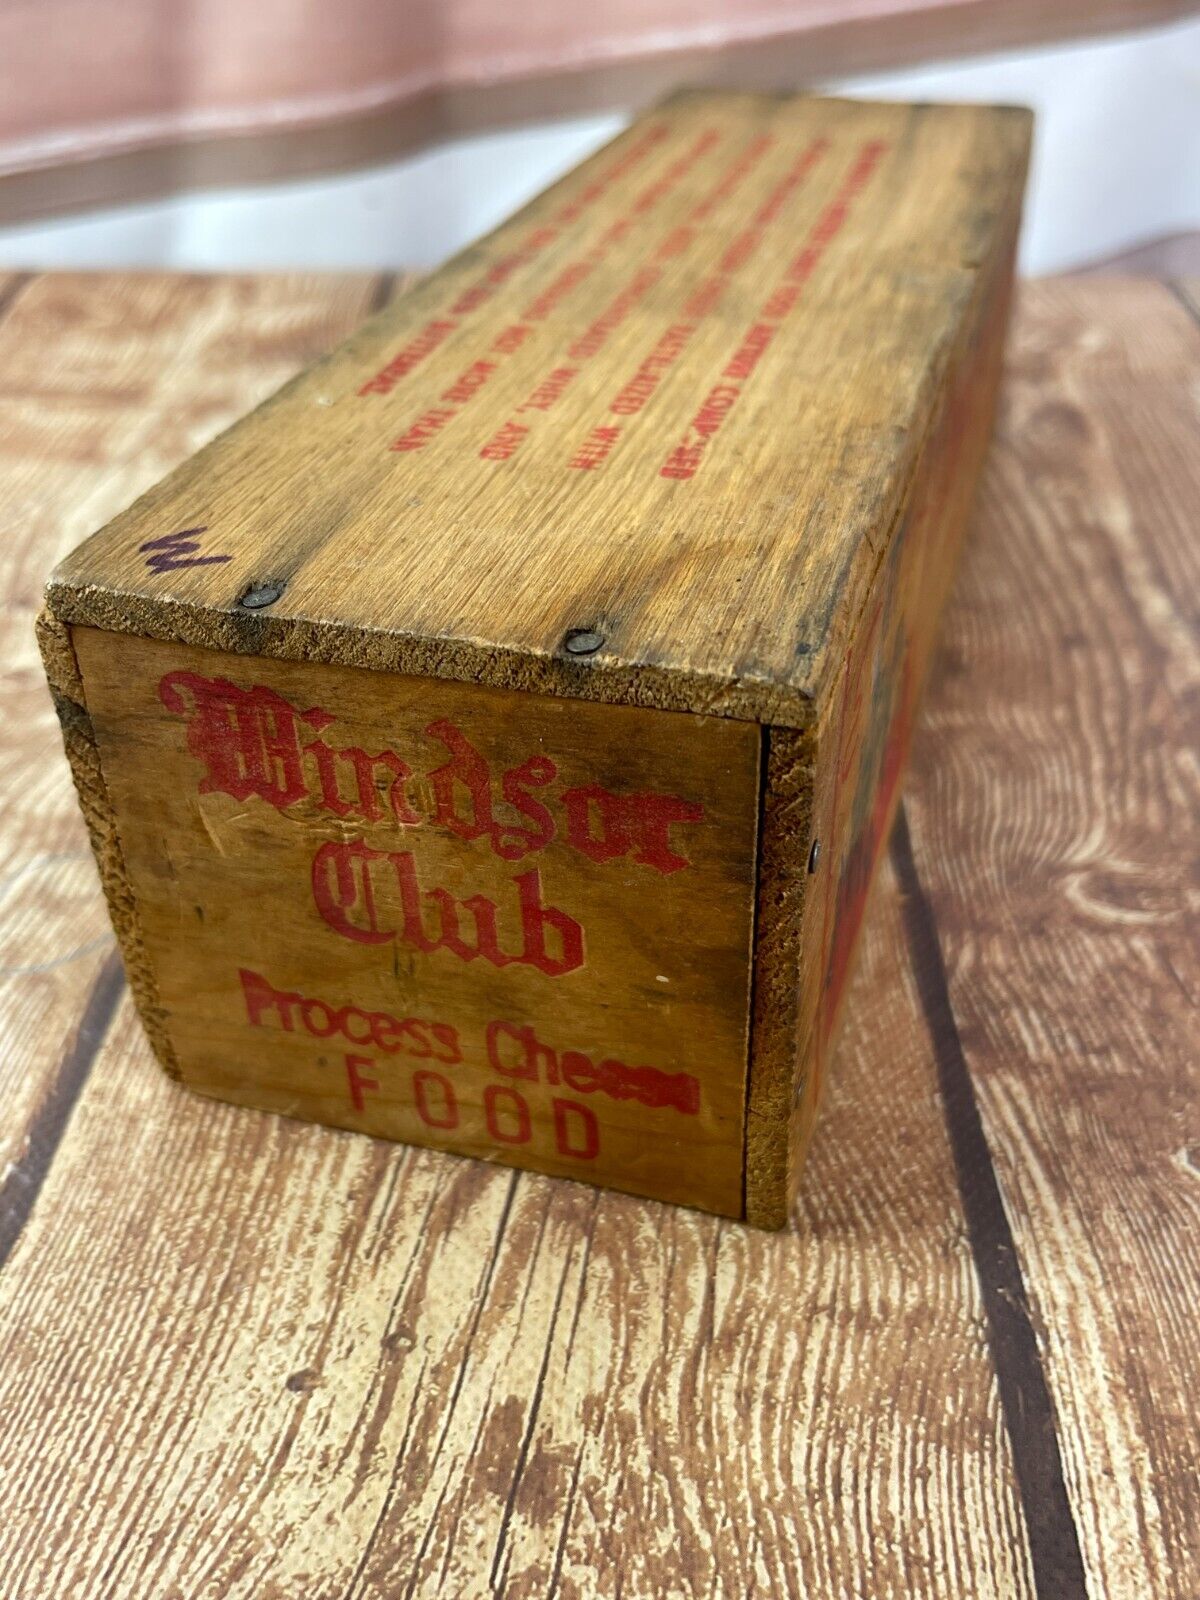 Windsor Club 2 Lb Processed Cheese Food/Spread Wisconsin Wood Box